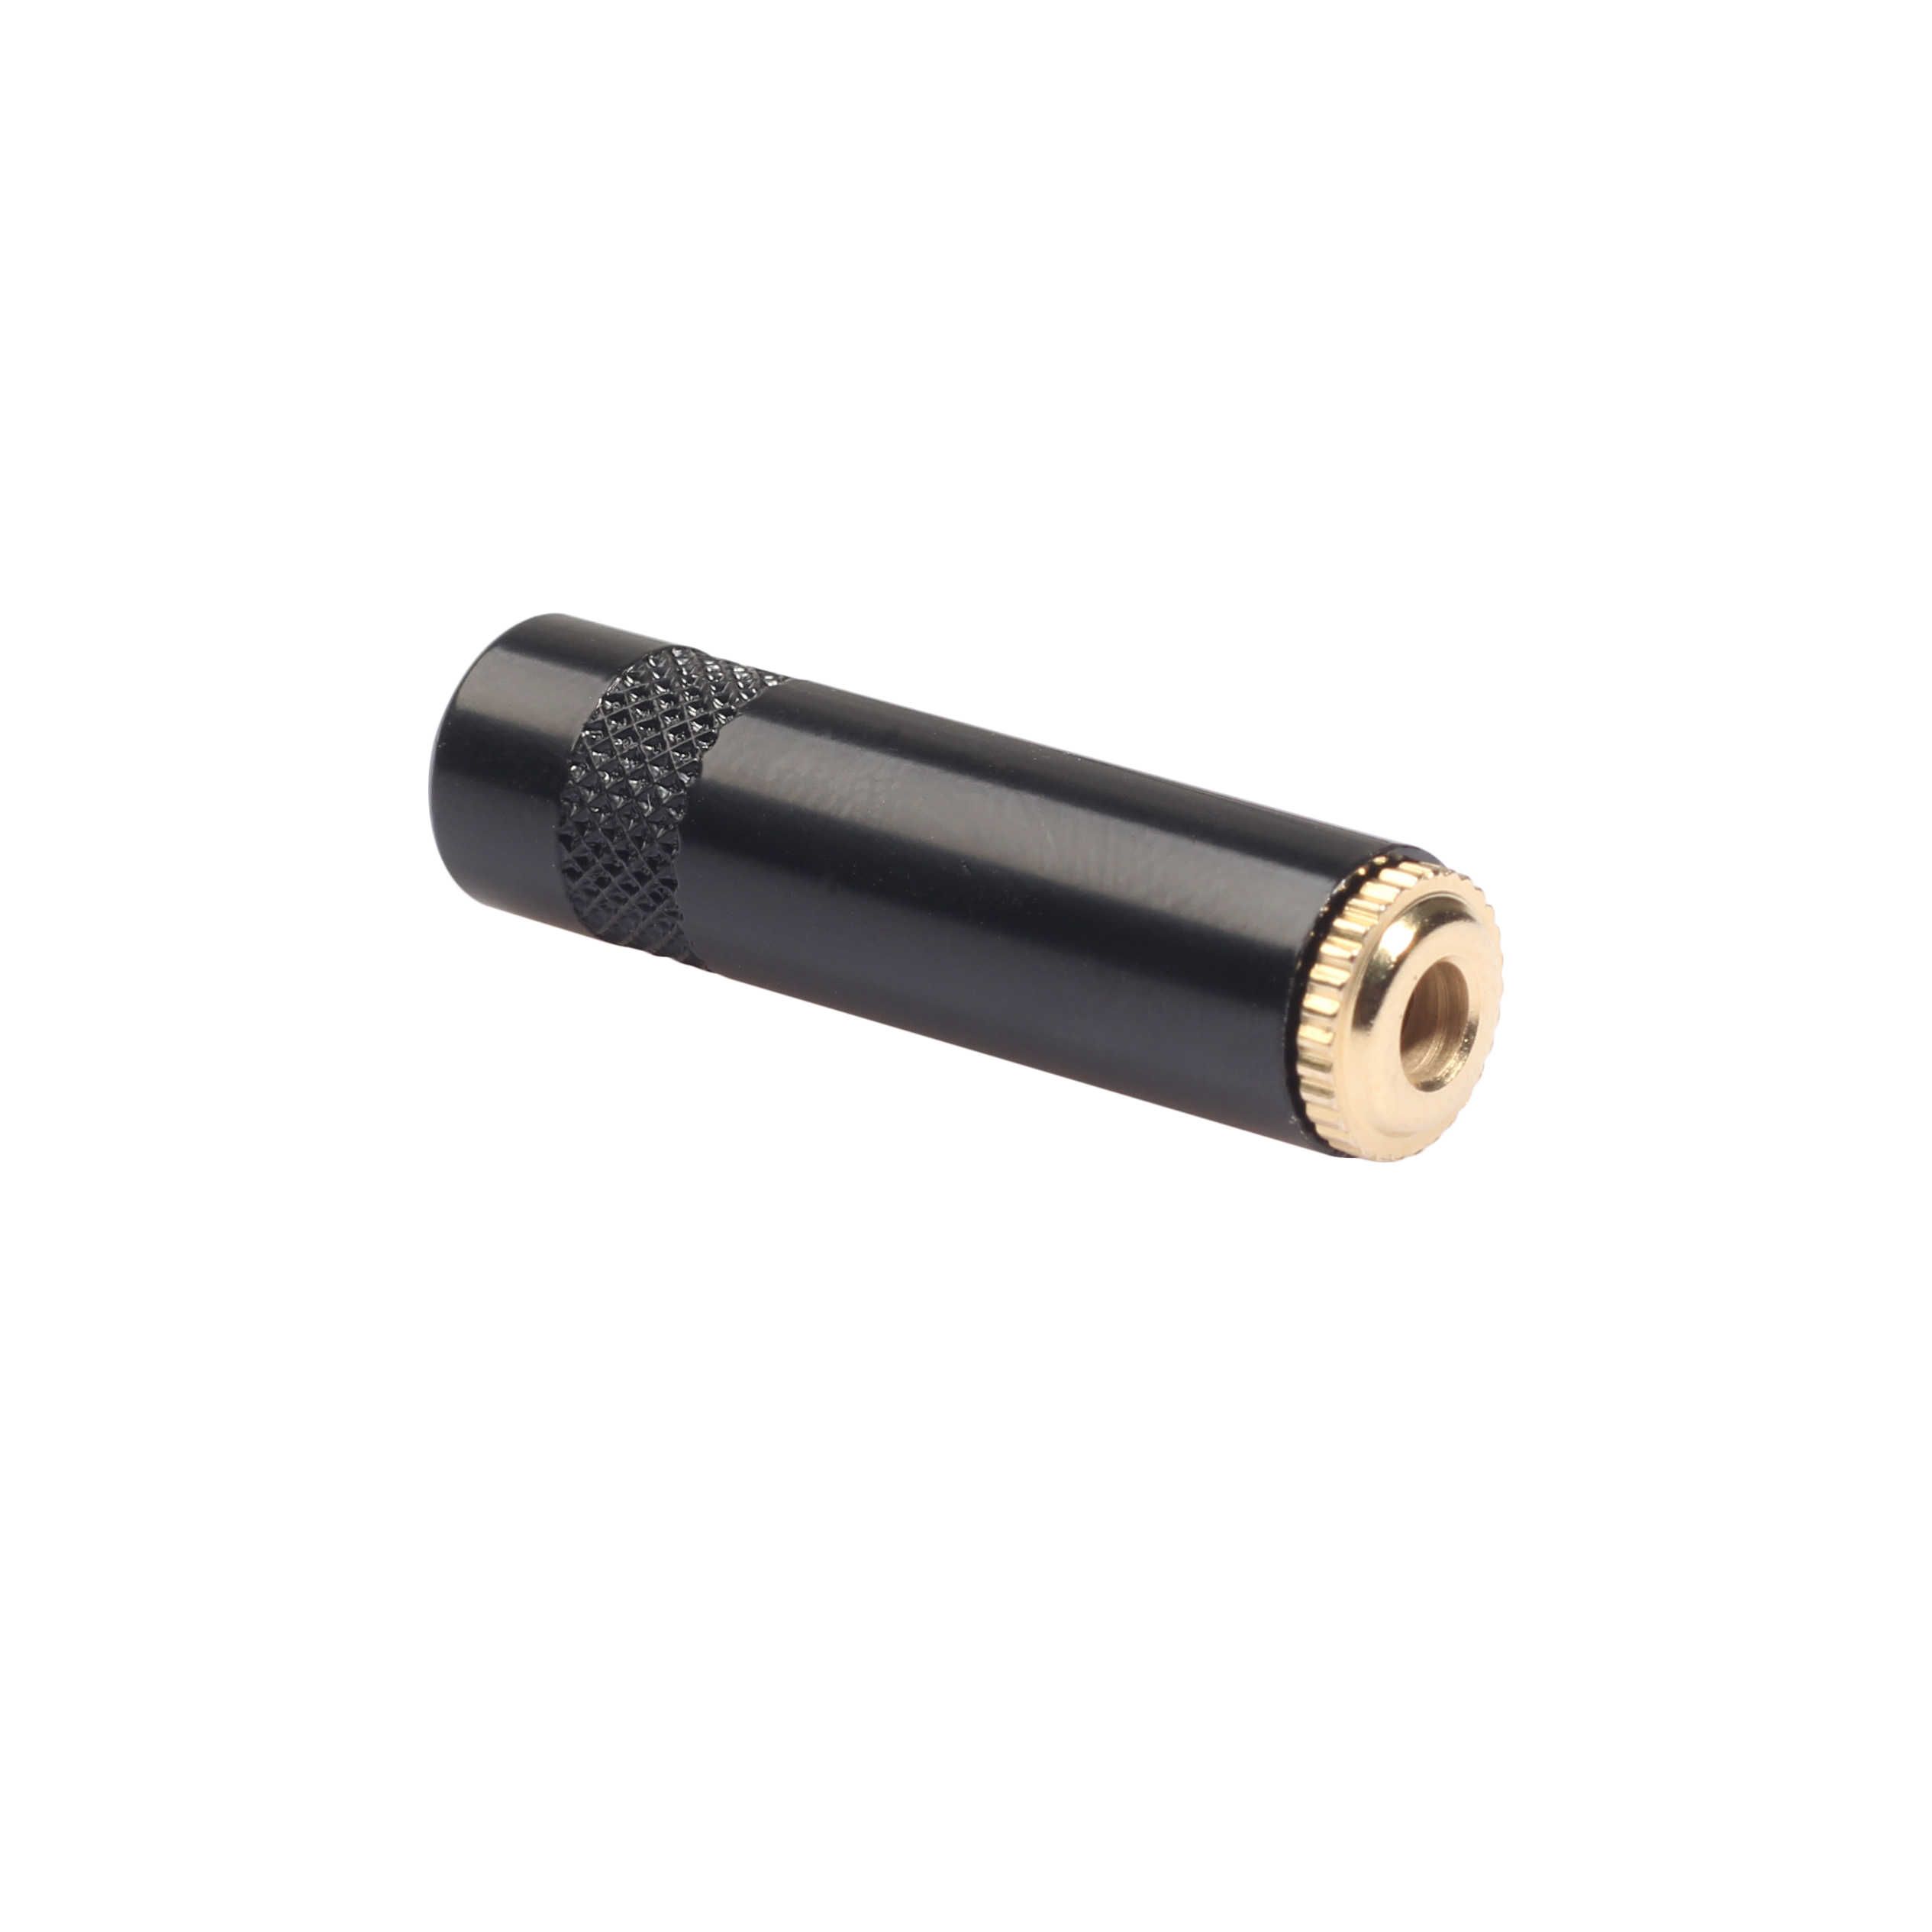 REXLIS-35mm-Female-Soldering-Plug-TC227-Black-Jack-Audio-female-Jack-3-pole-Stereo-Socket-Gold-Plate-1526860